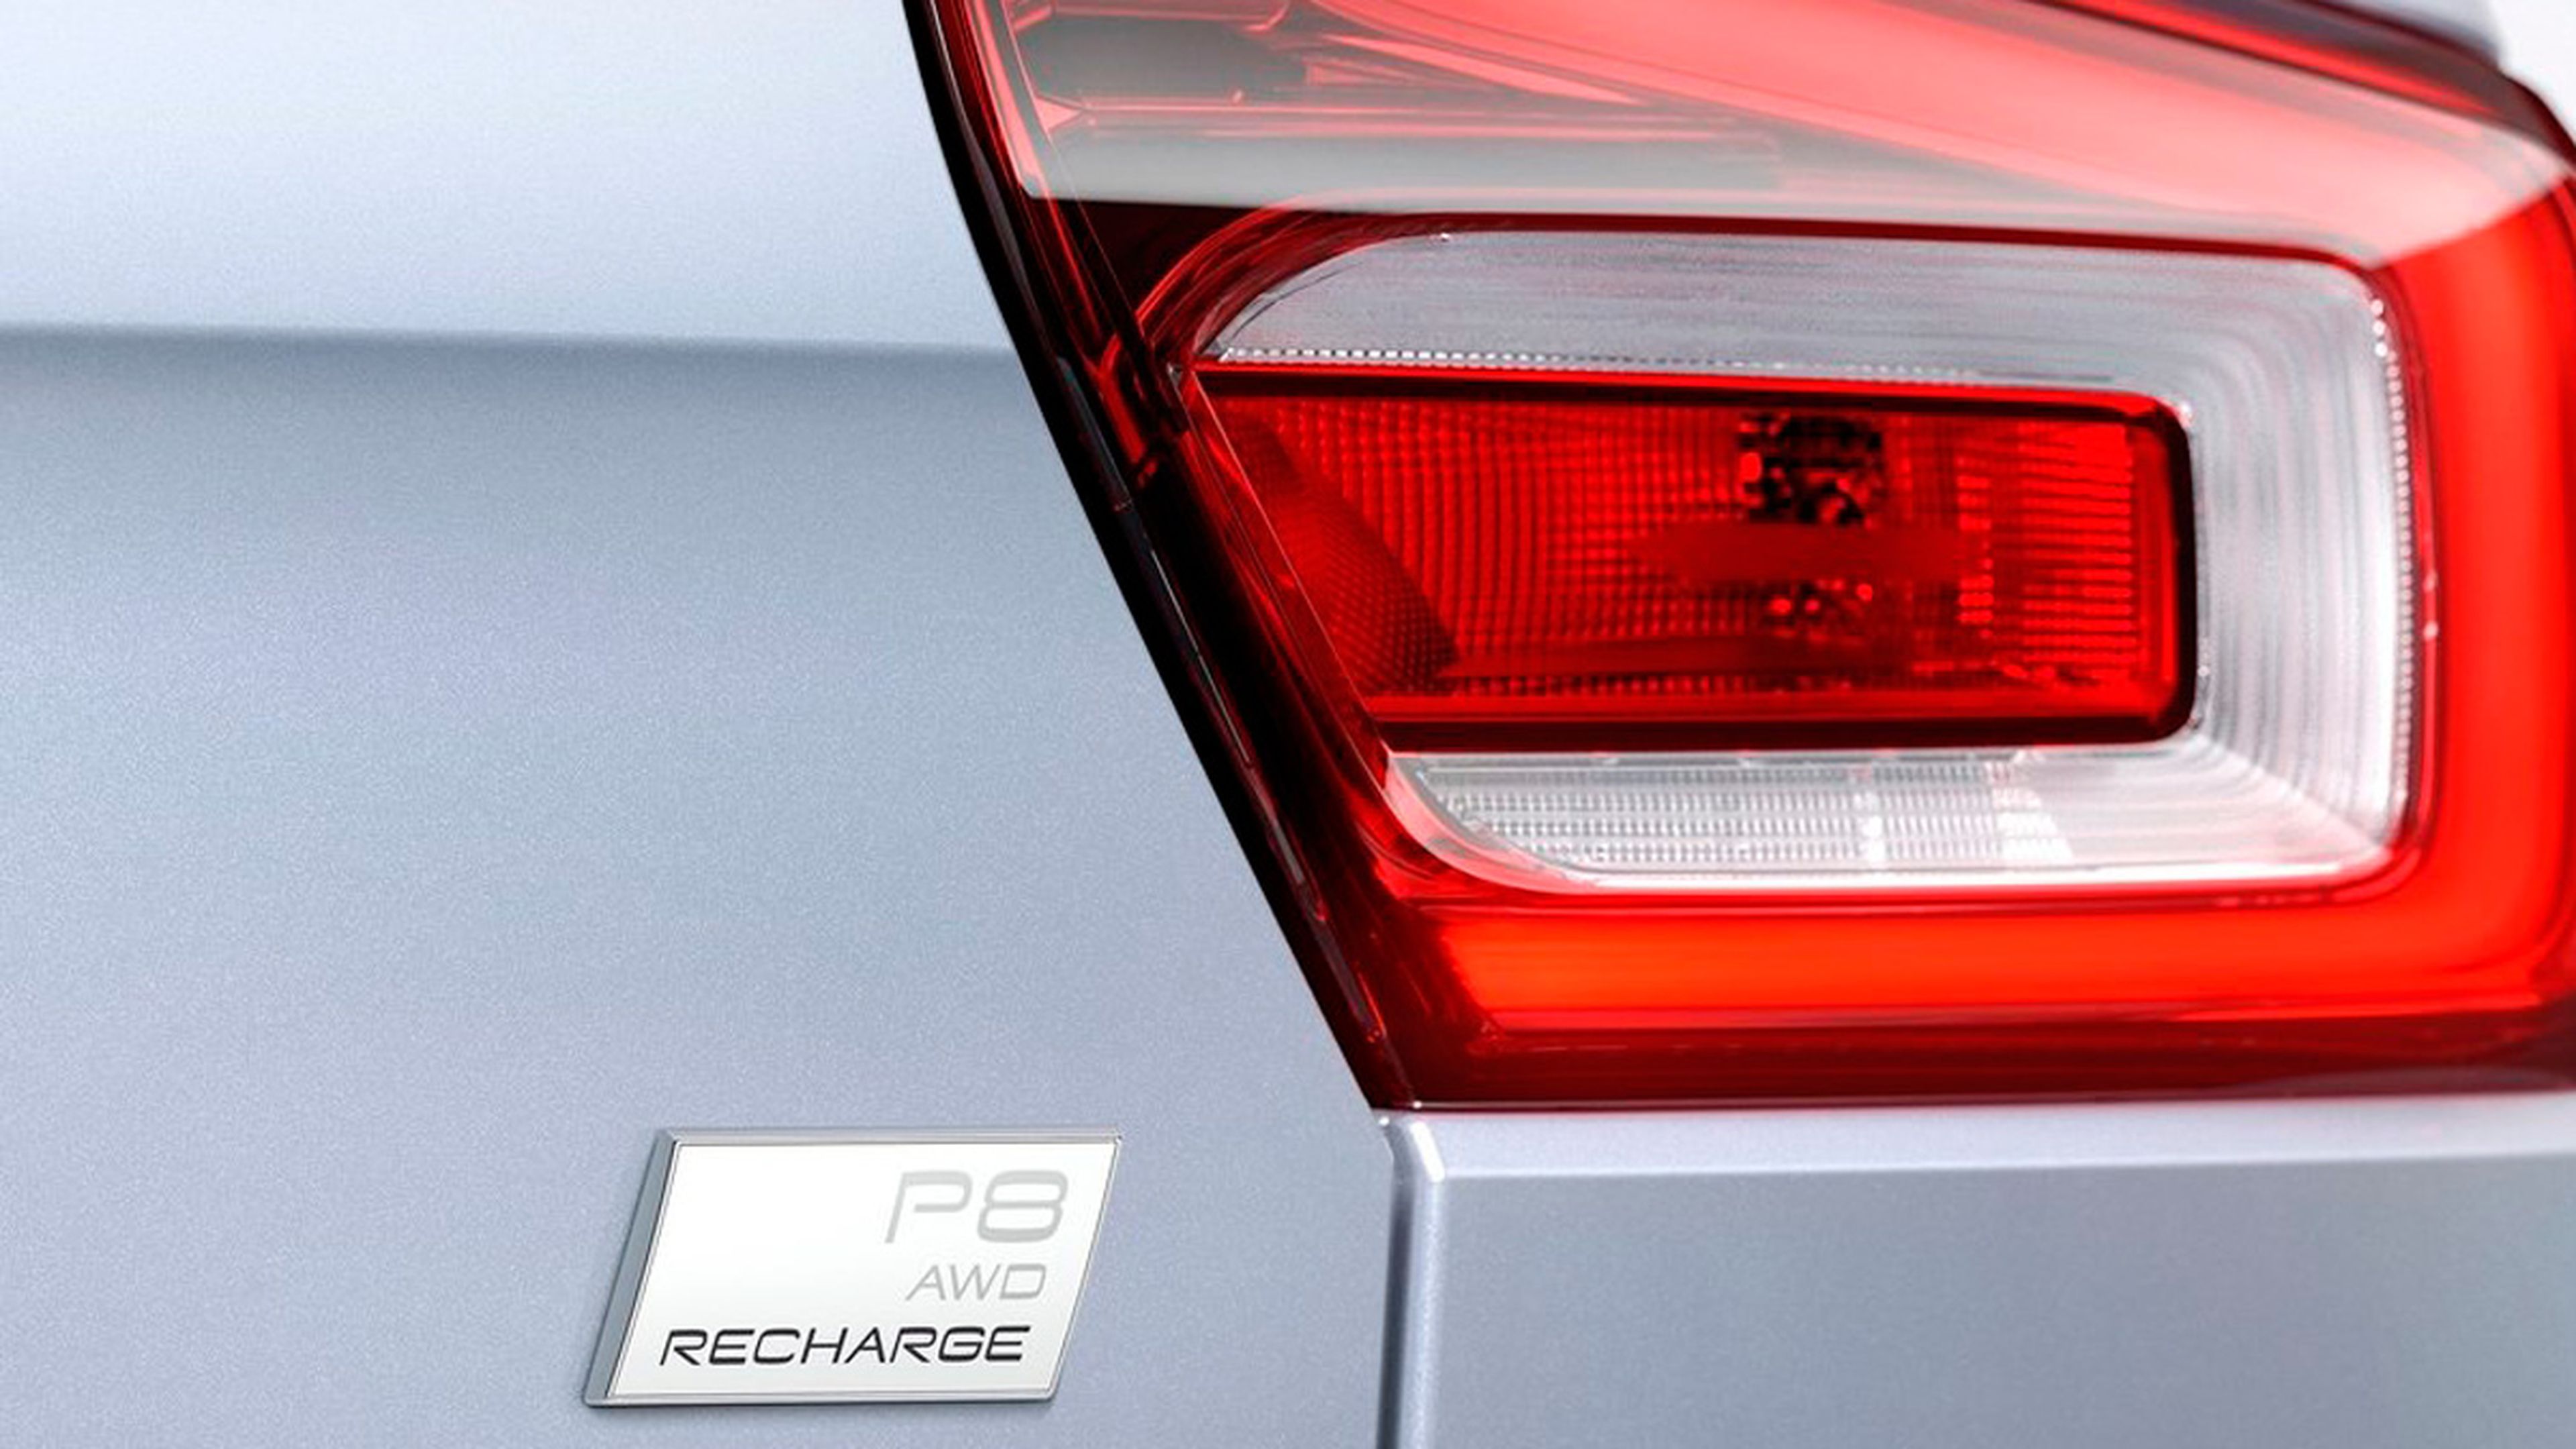 Volvo P8 AWD Recharge